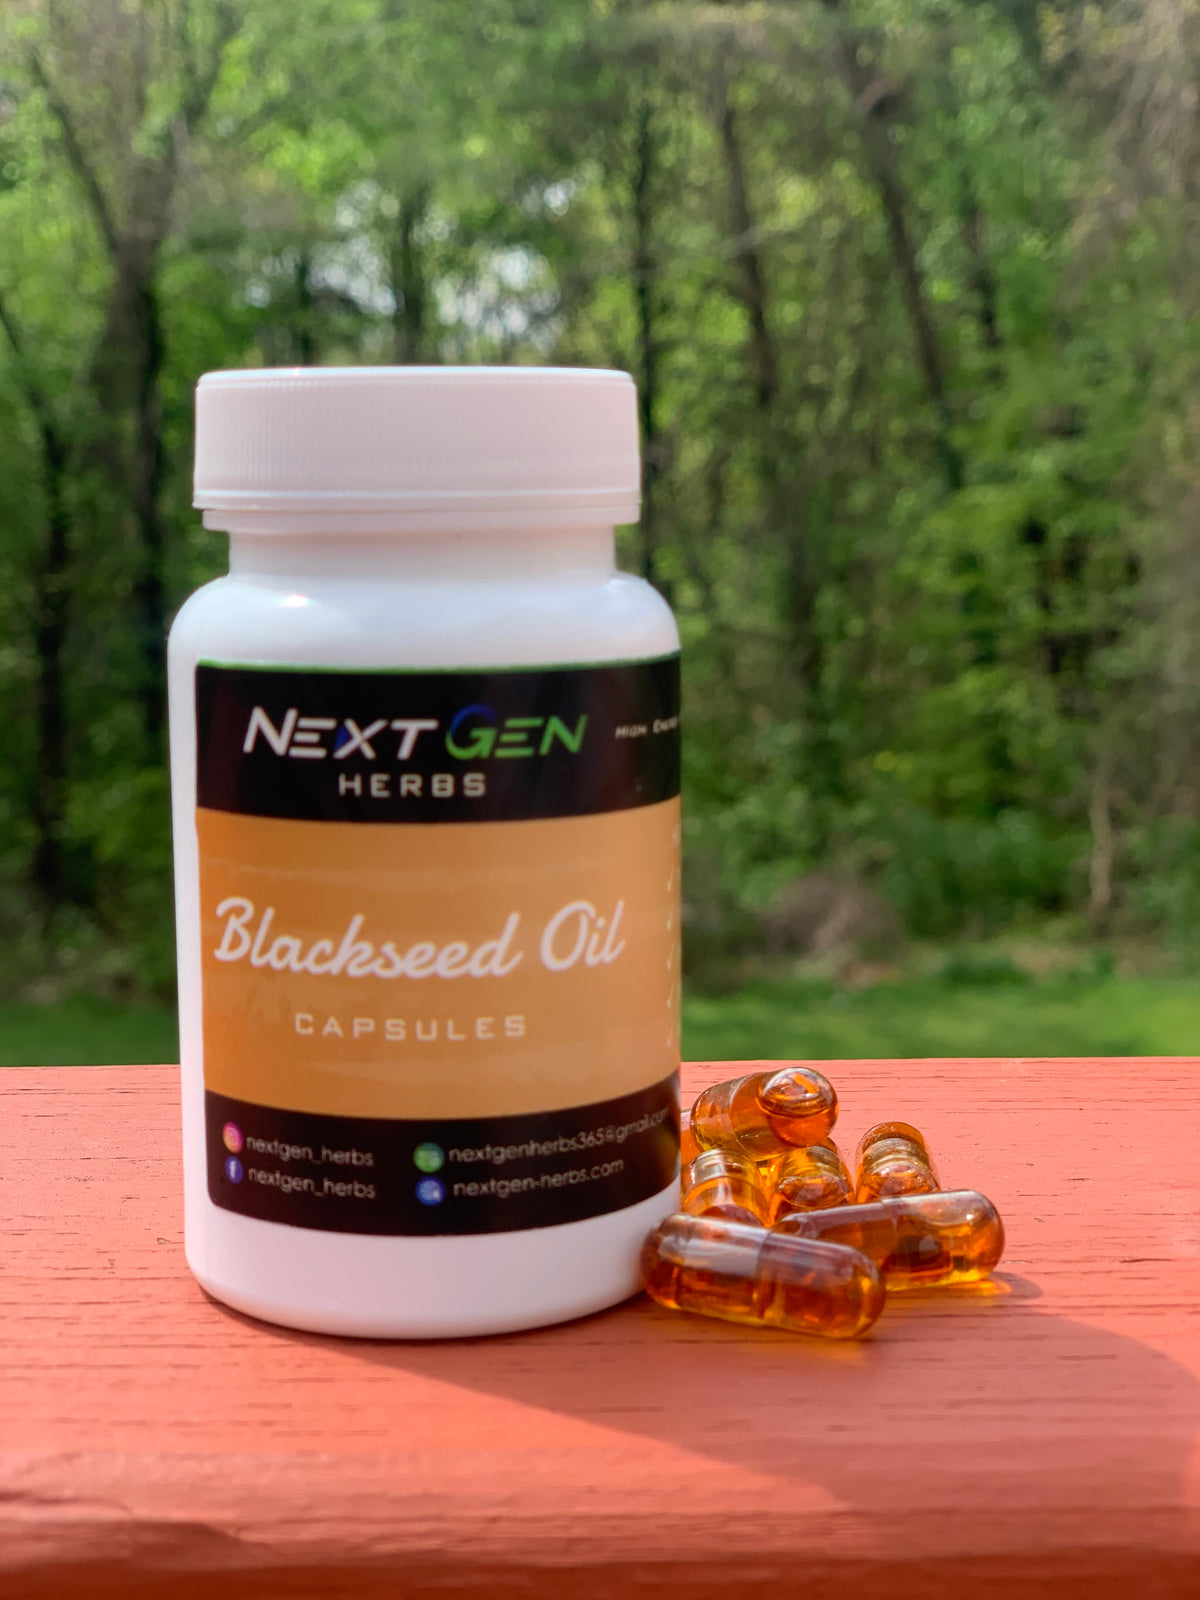 BLACKSEED OIL PILLS - Next Generation Herbs 